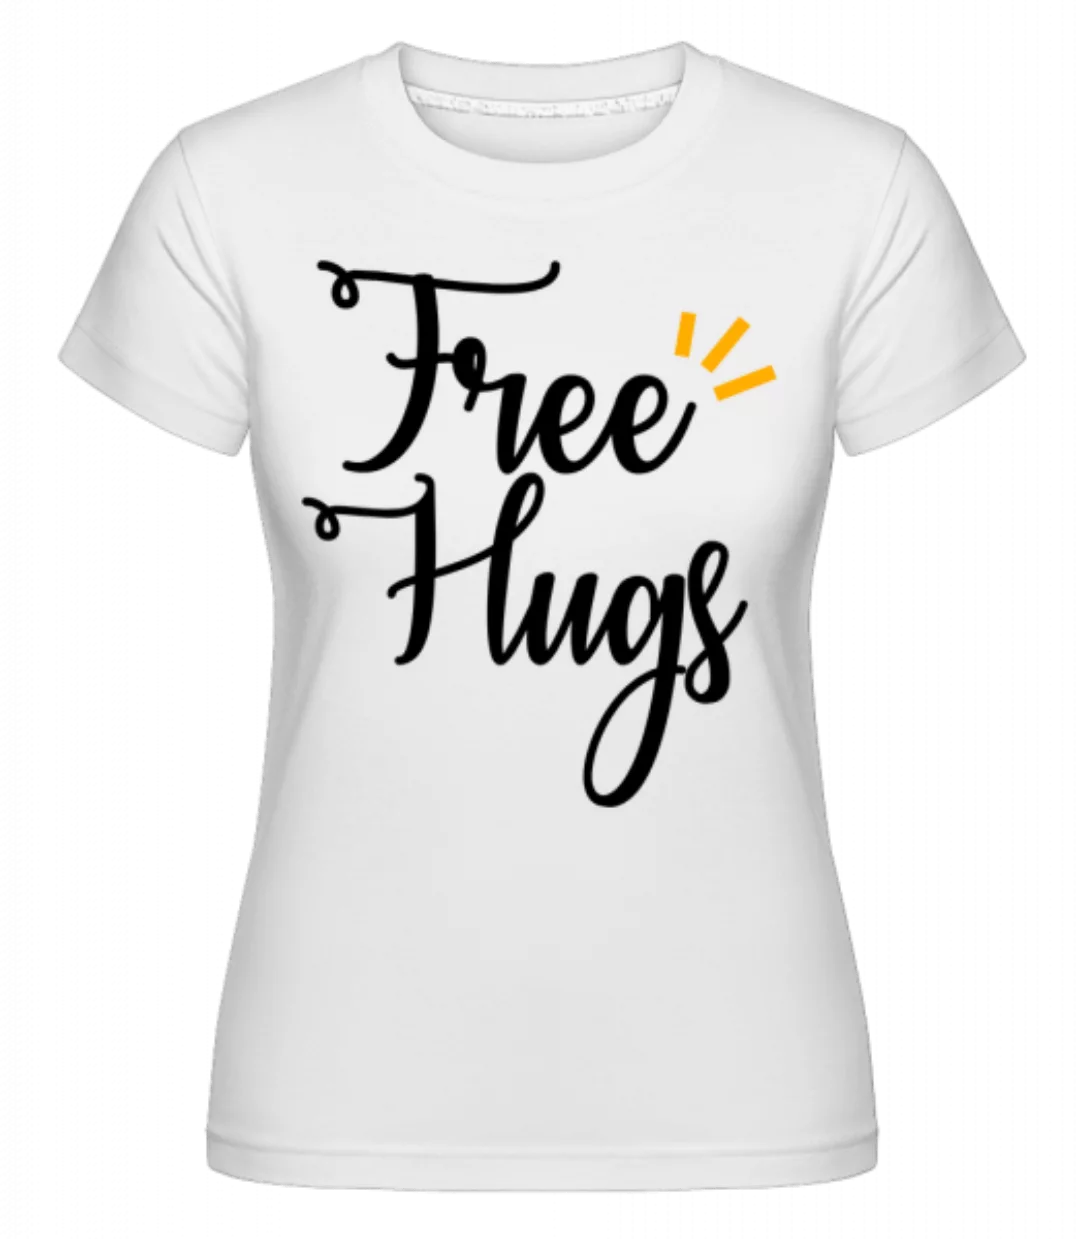 Free Hugs · Shirtinator Frauen T-Shirt günstig online kaufen